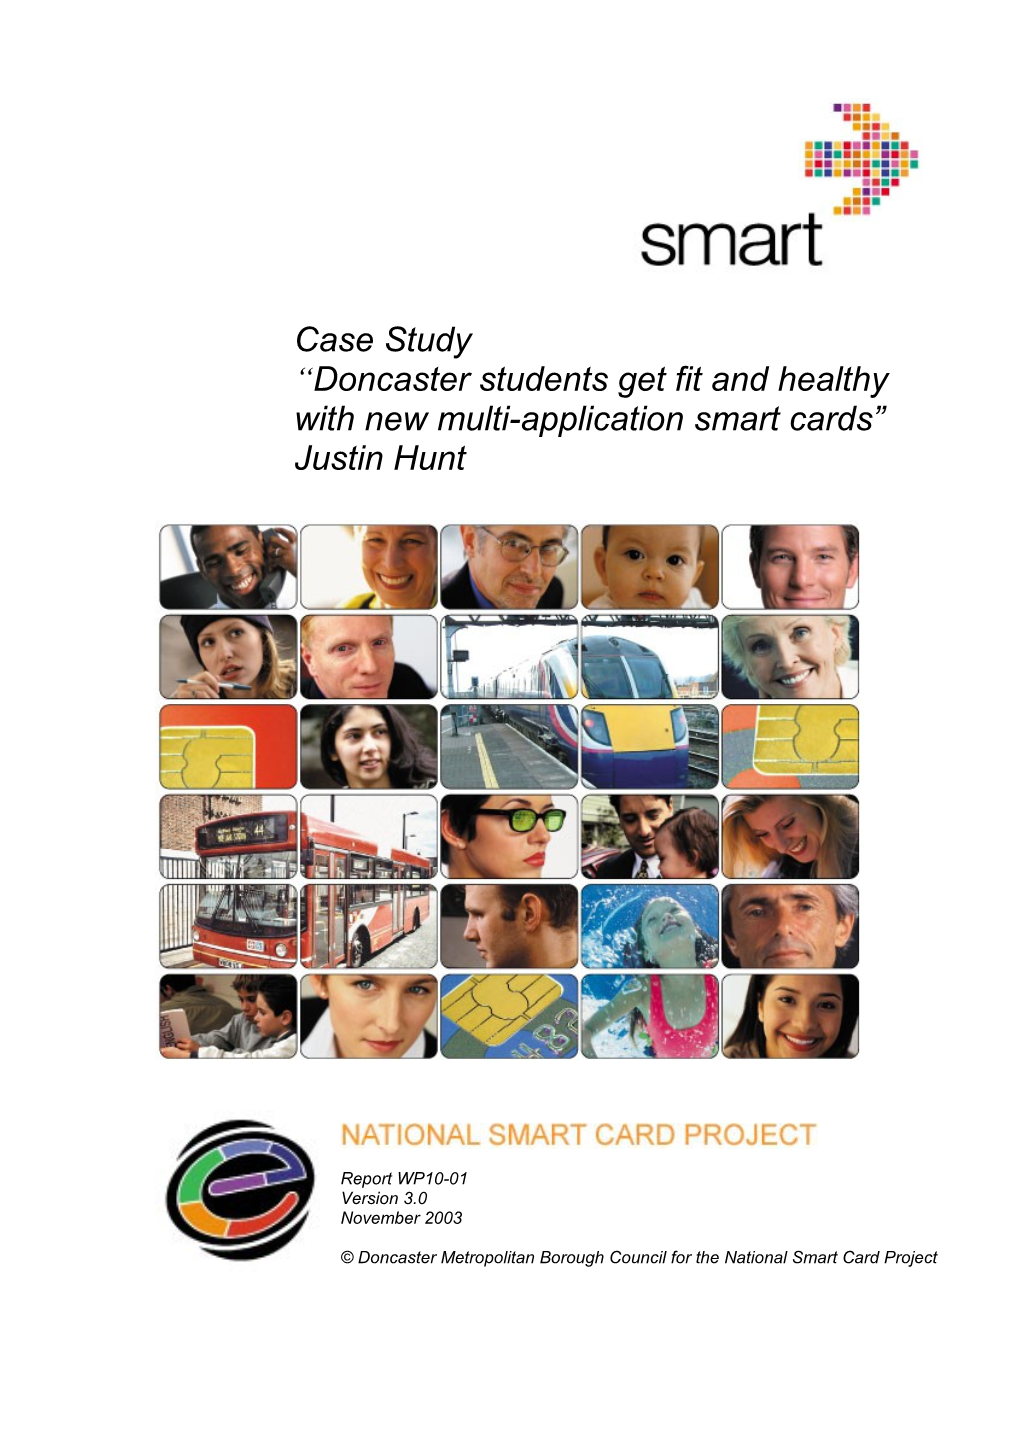 Doncaster Metropolitan Borough Council for the National Smart Card Project